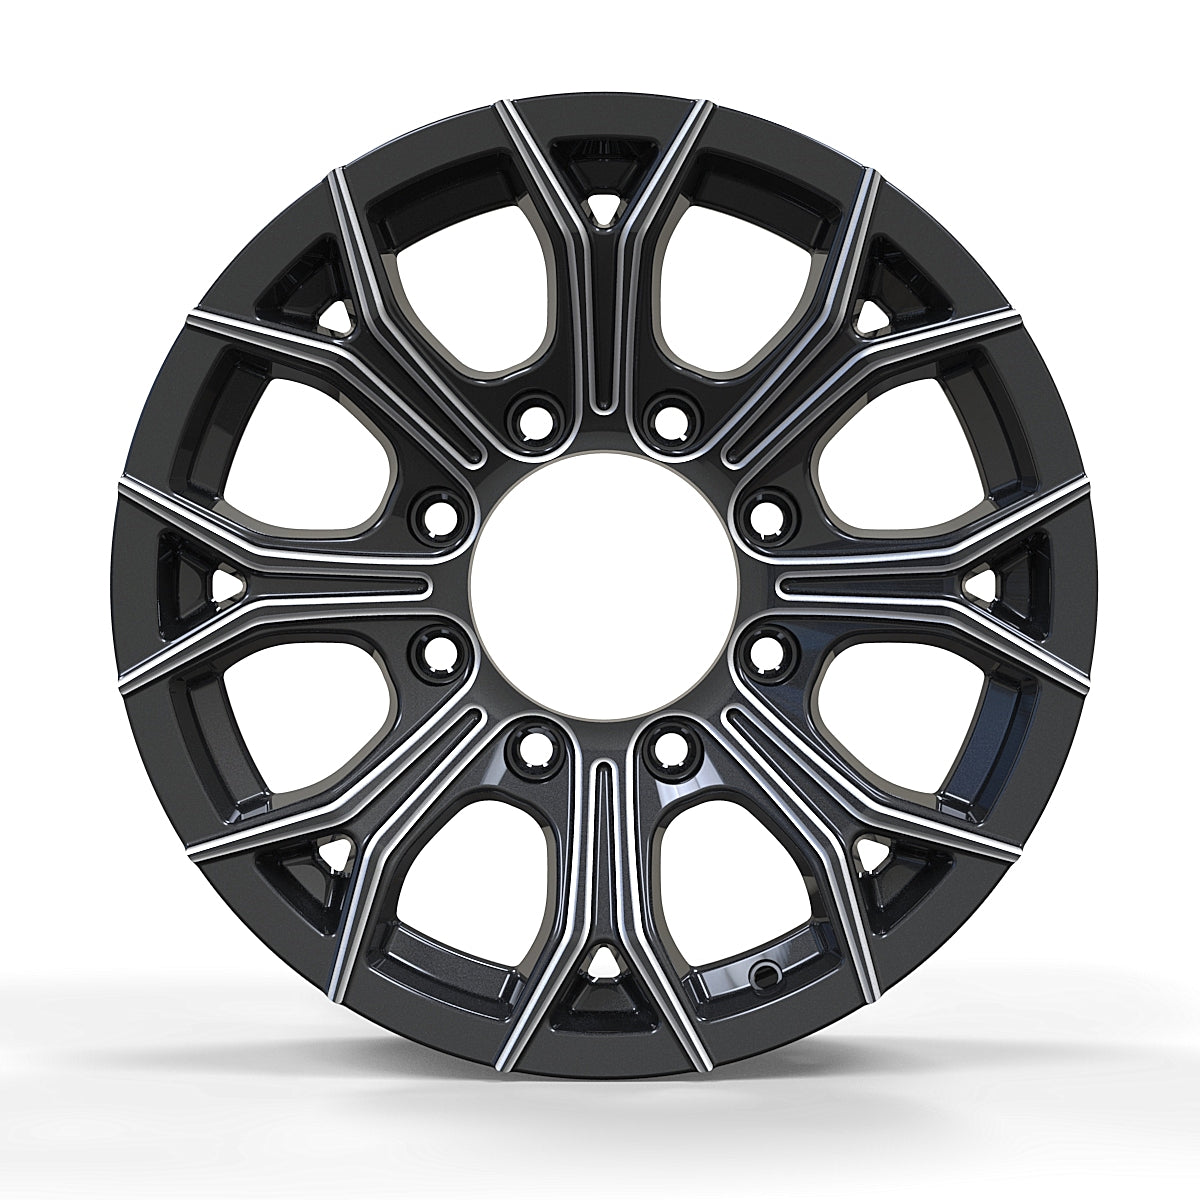 CW618 16X6, 8 Lug BLACK MACHINE FACED WHEEL for Trailer Tires